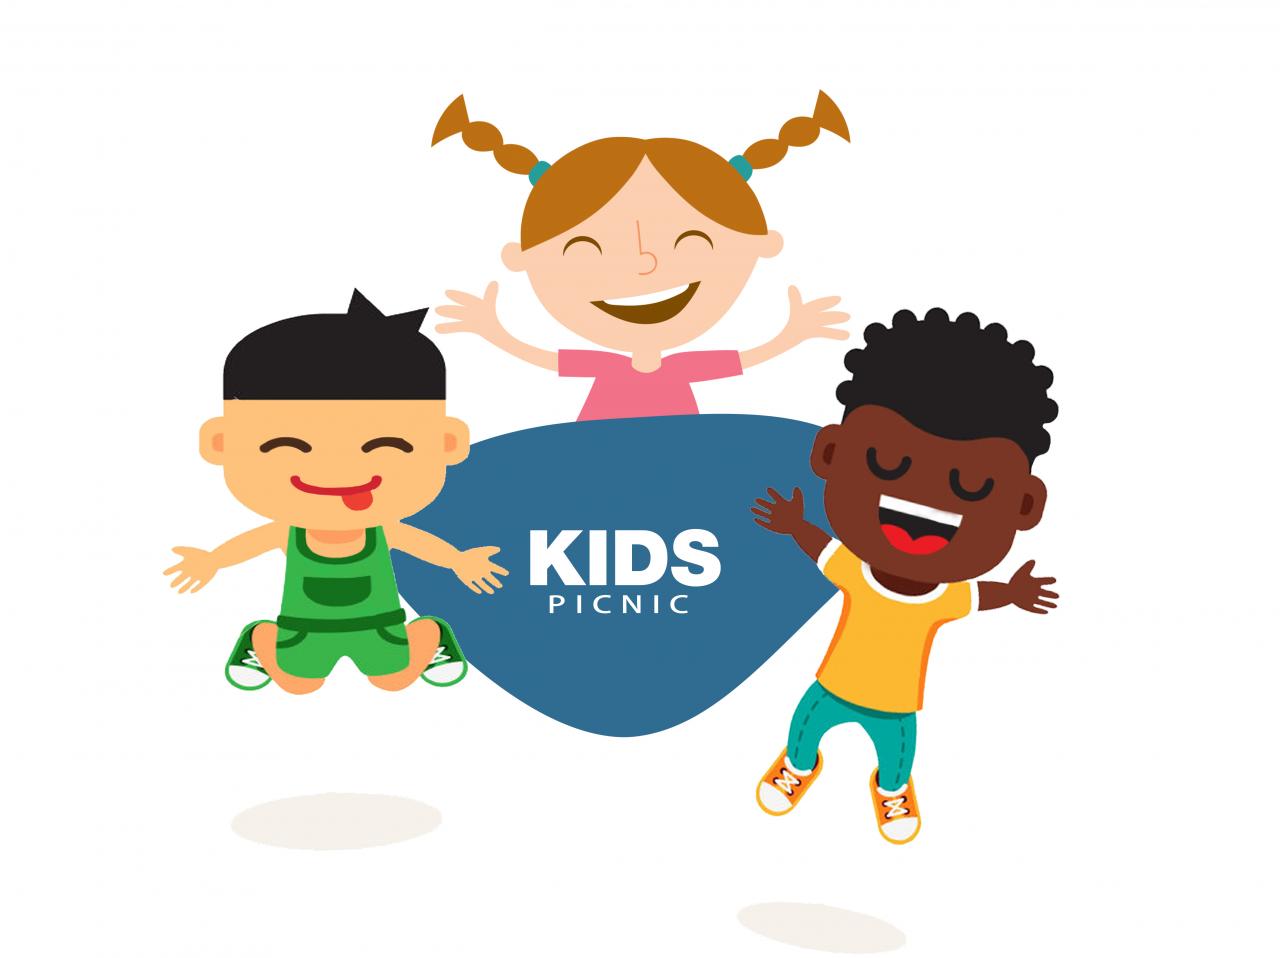 Kids picnic logo.jpg